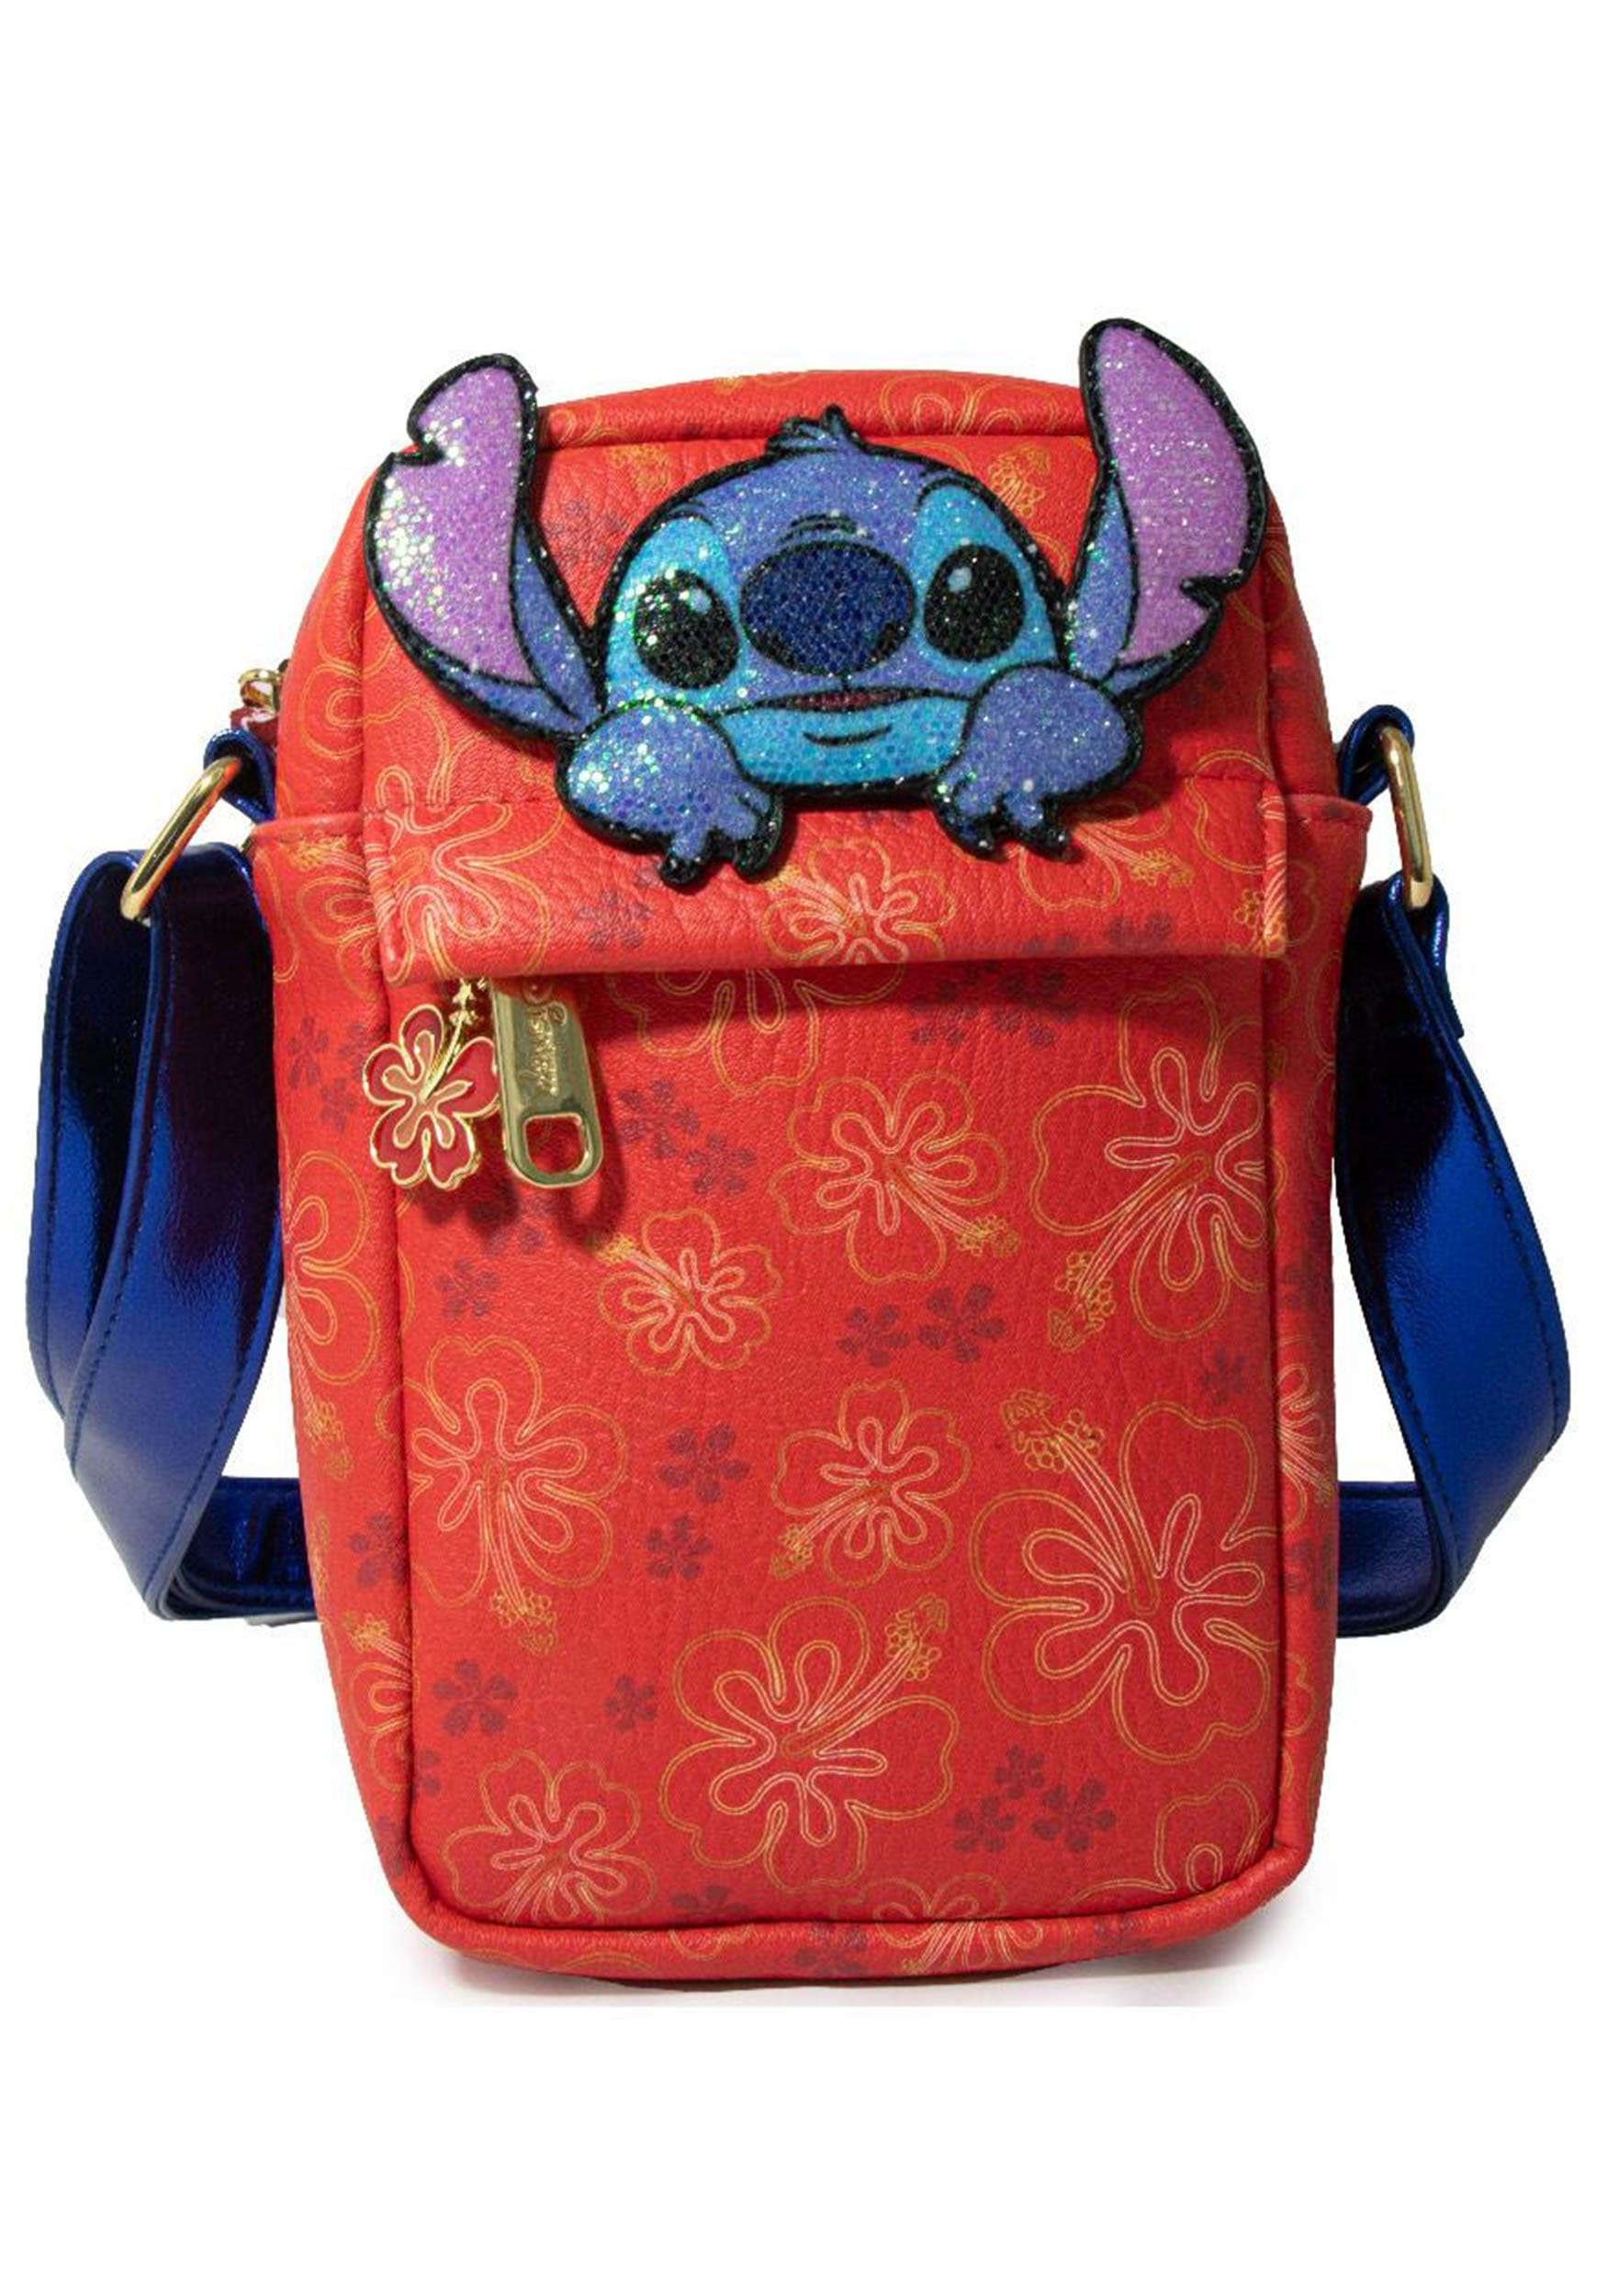 Disney Lilo & Stitch Tropical Crossbody Bag